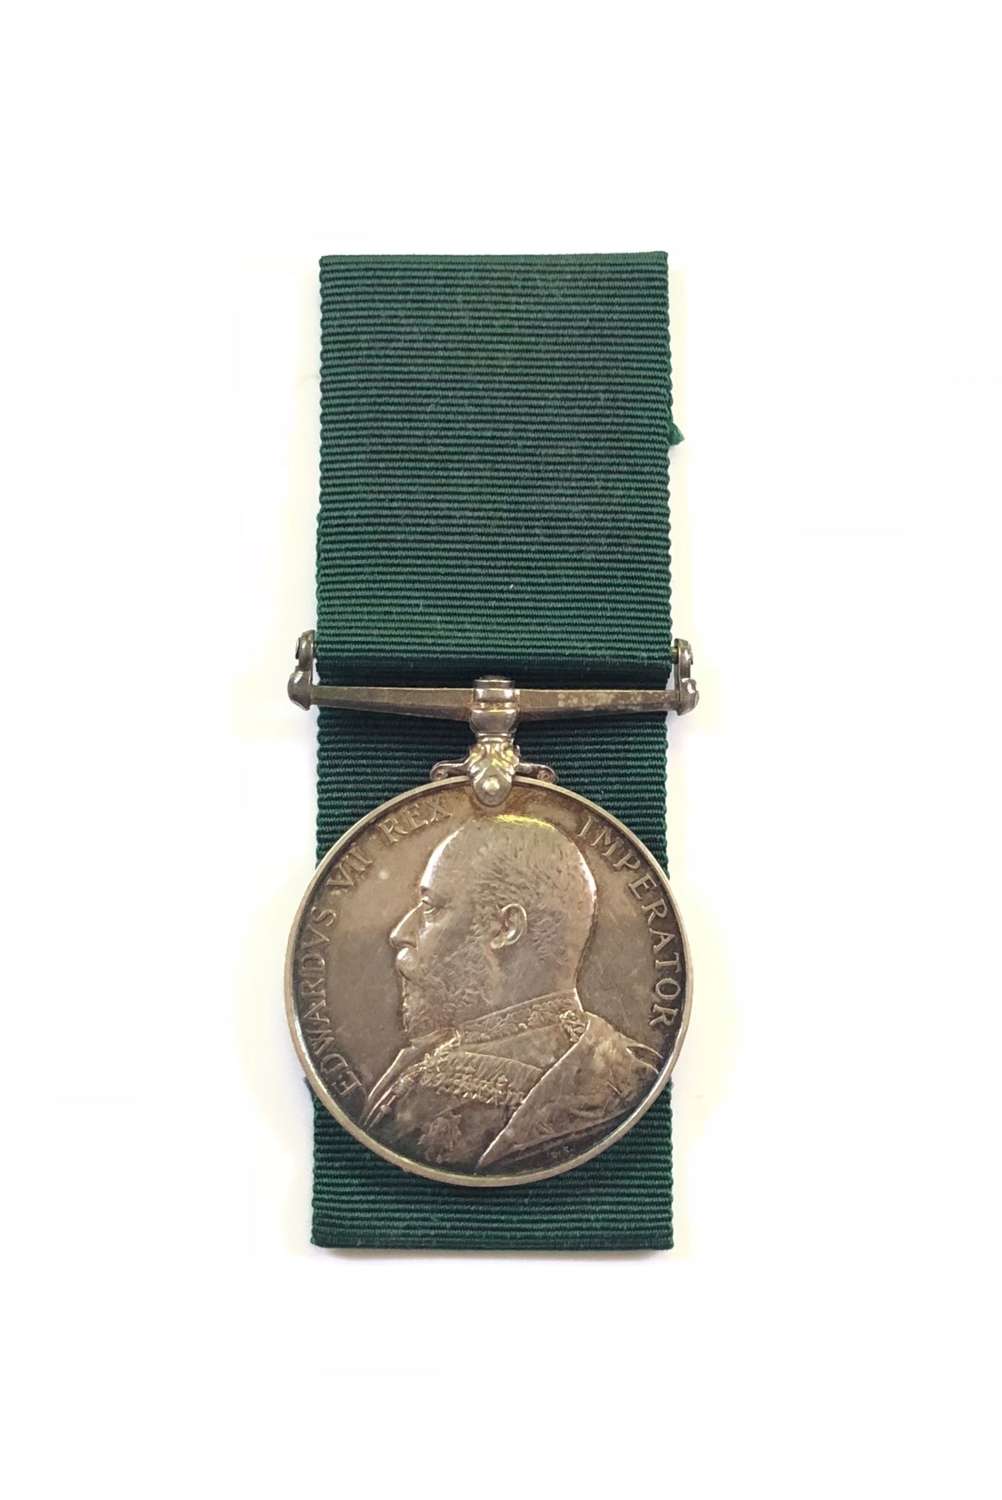 2nd VB Duke of Cornwall’s DCLI Officer’s Edwardian Volunteer Medal